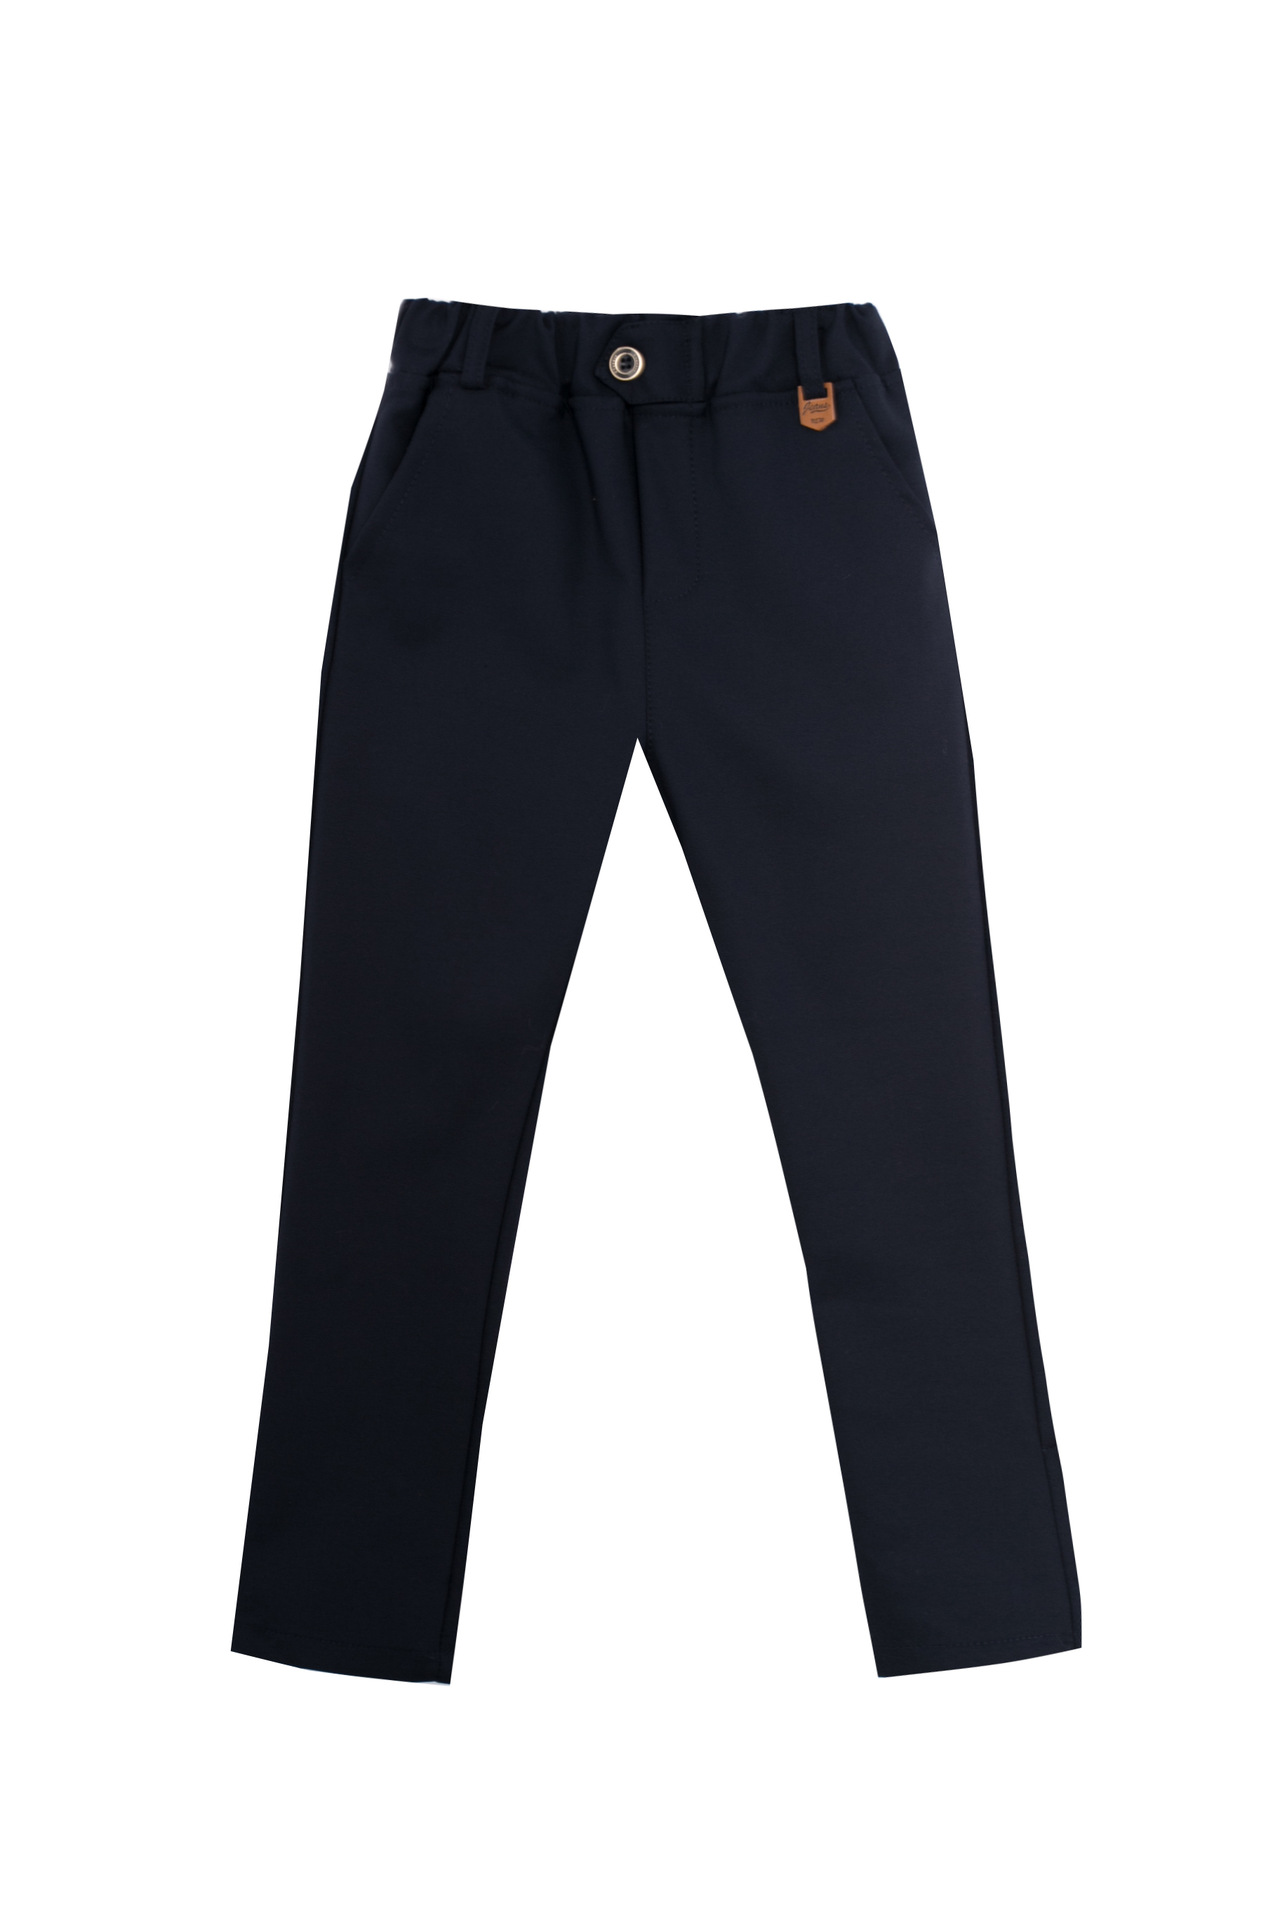 Boys Casual Trousers Cargo Pants Spring Summer Fashion Elastic Cuffs Pants  | eBay